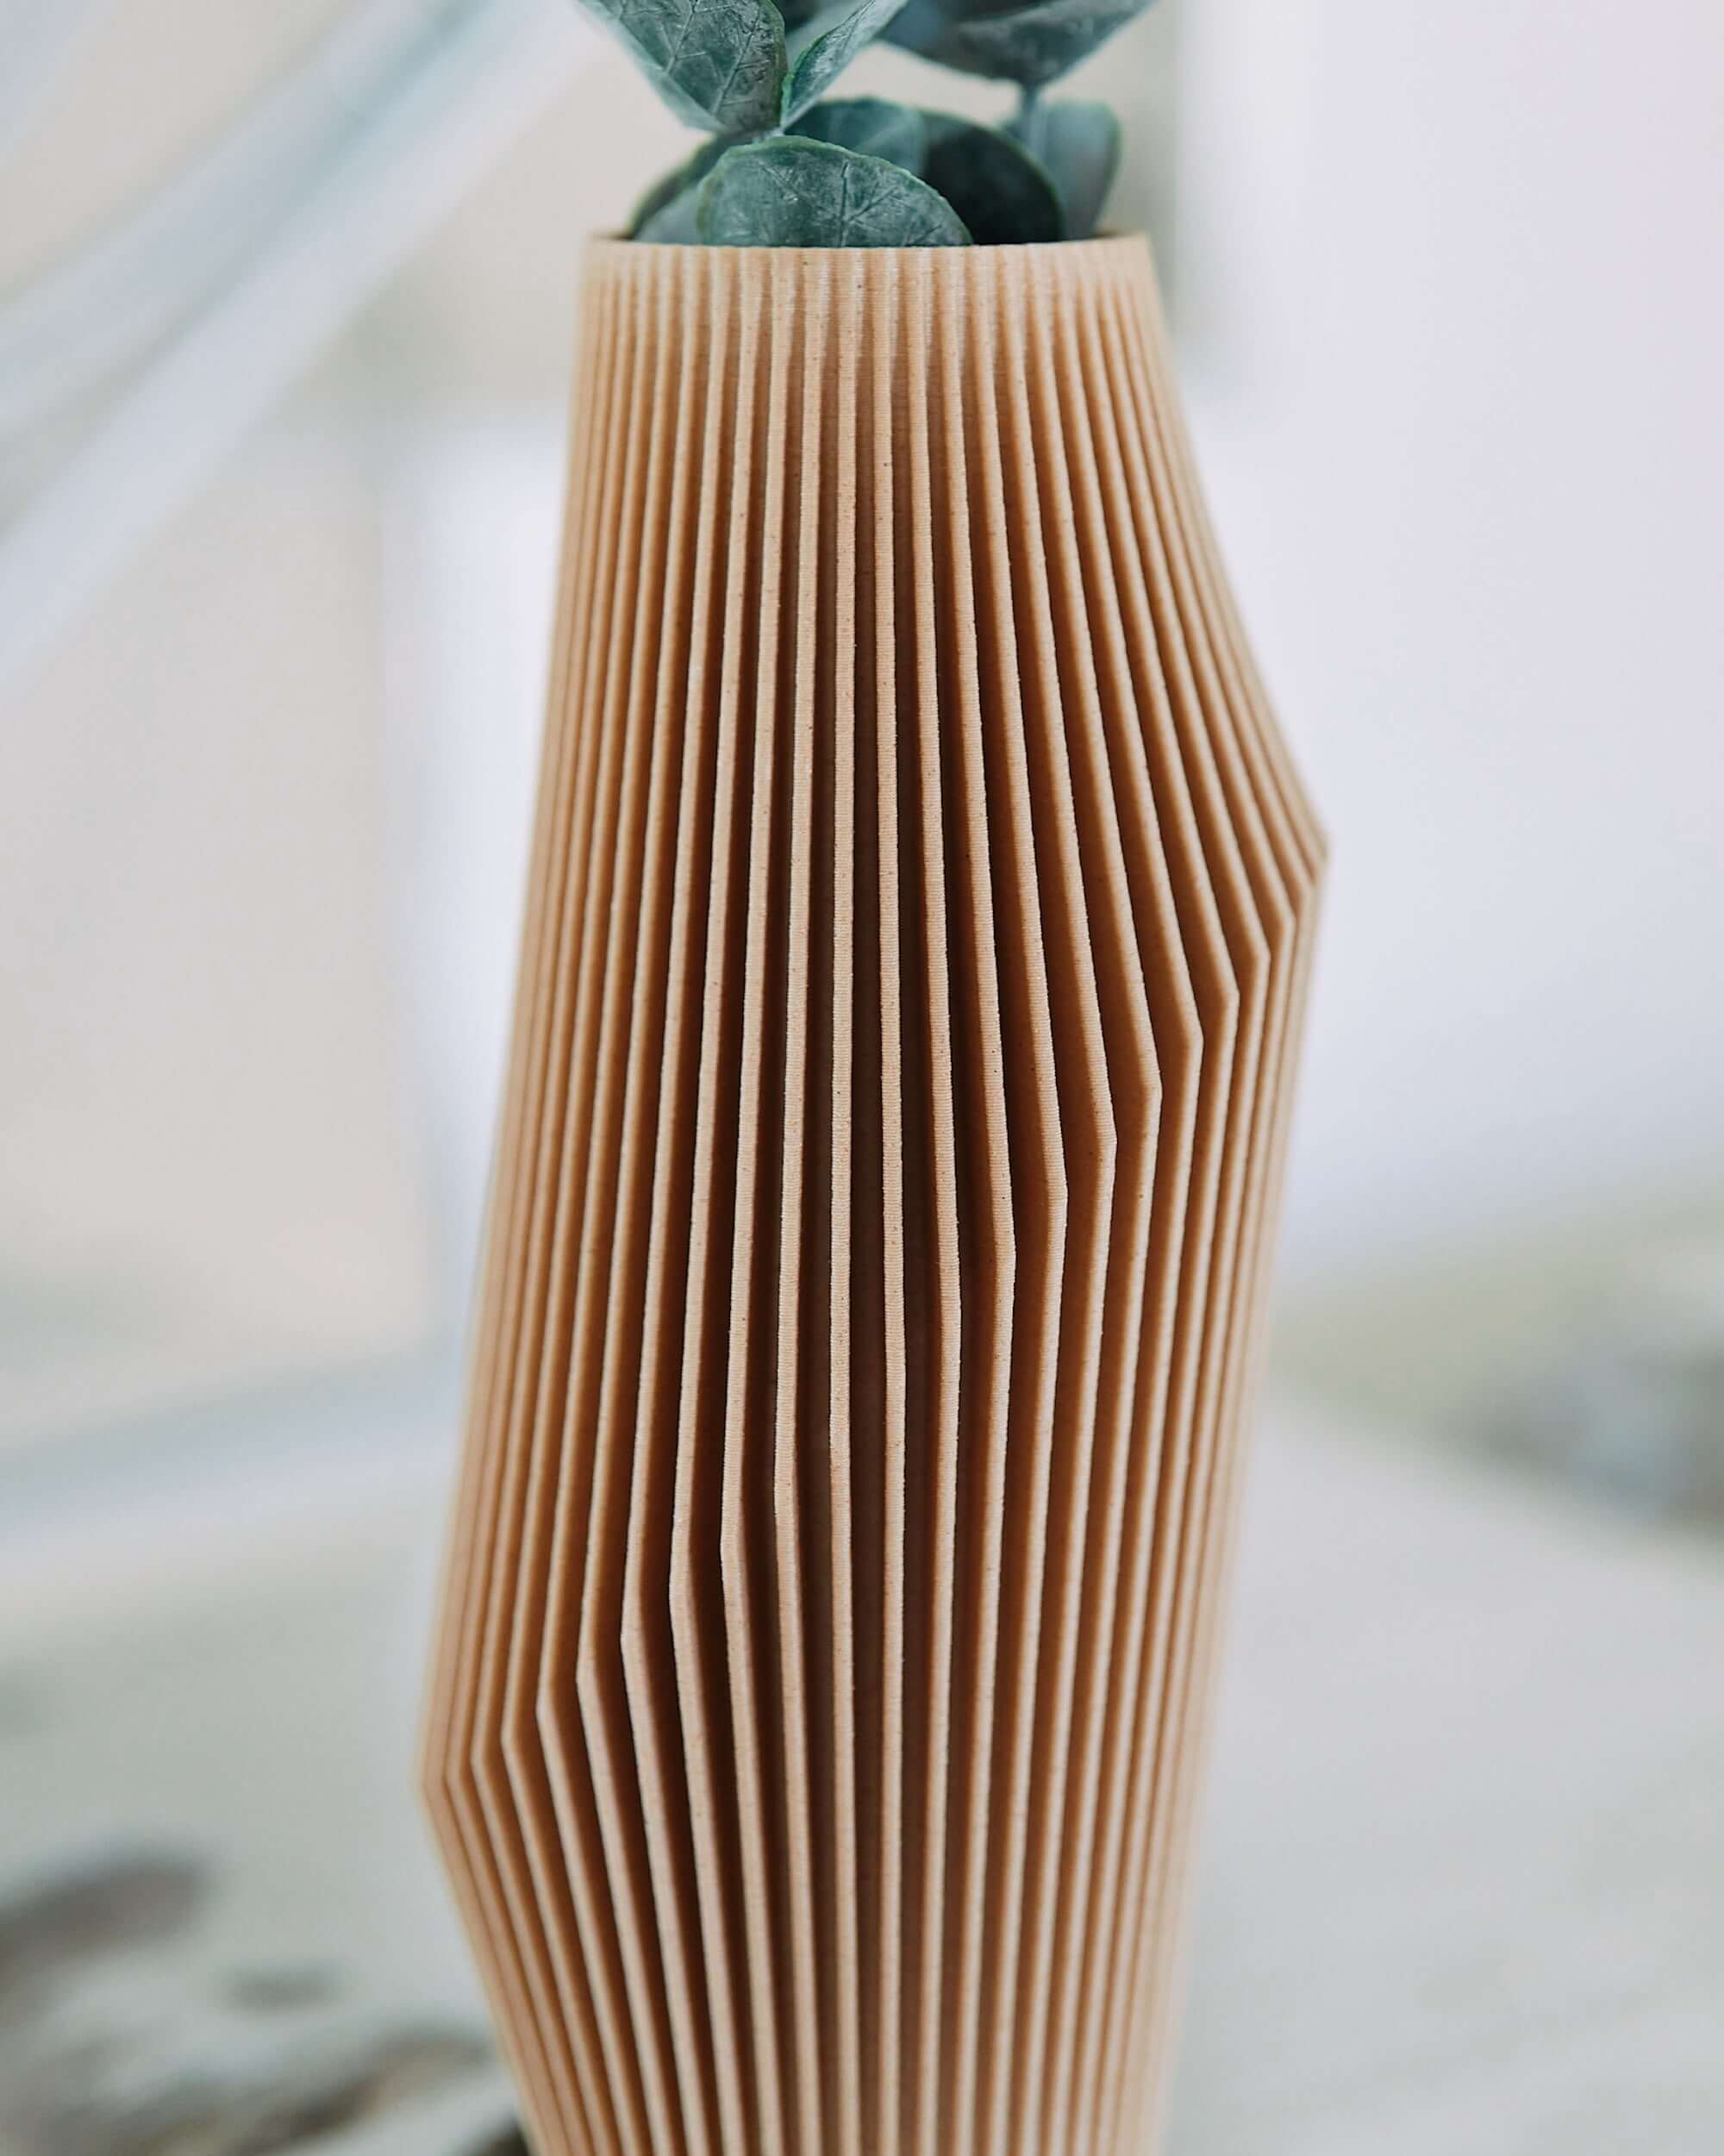 A close up abstract vase parametric patterning photo of a modernist vase / beige vase / boho vase NOVA by Woodland Pulse.